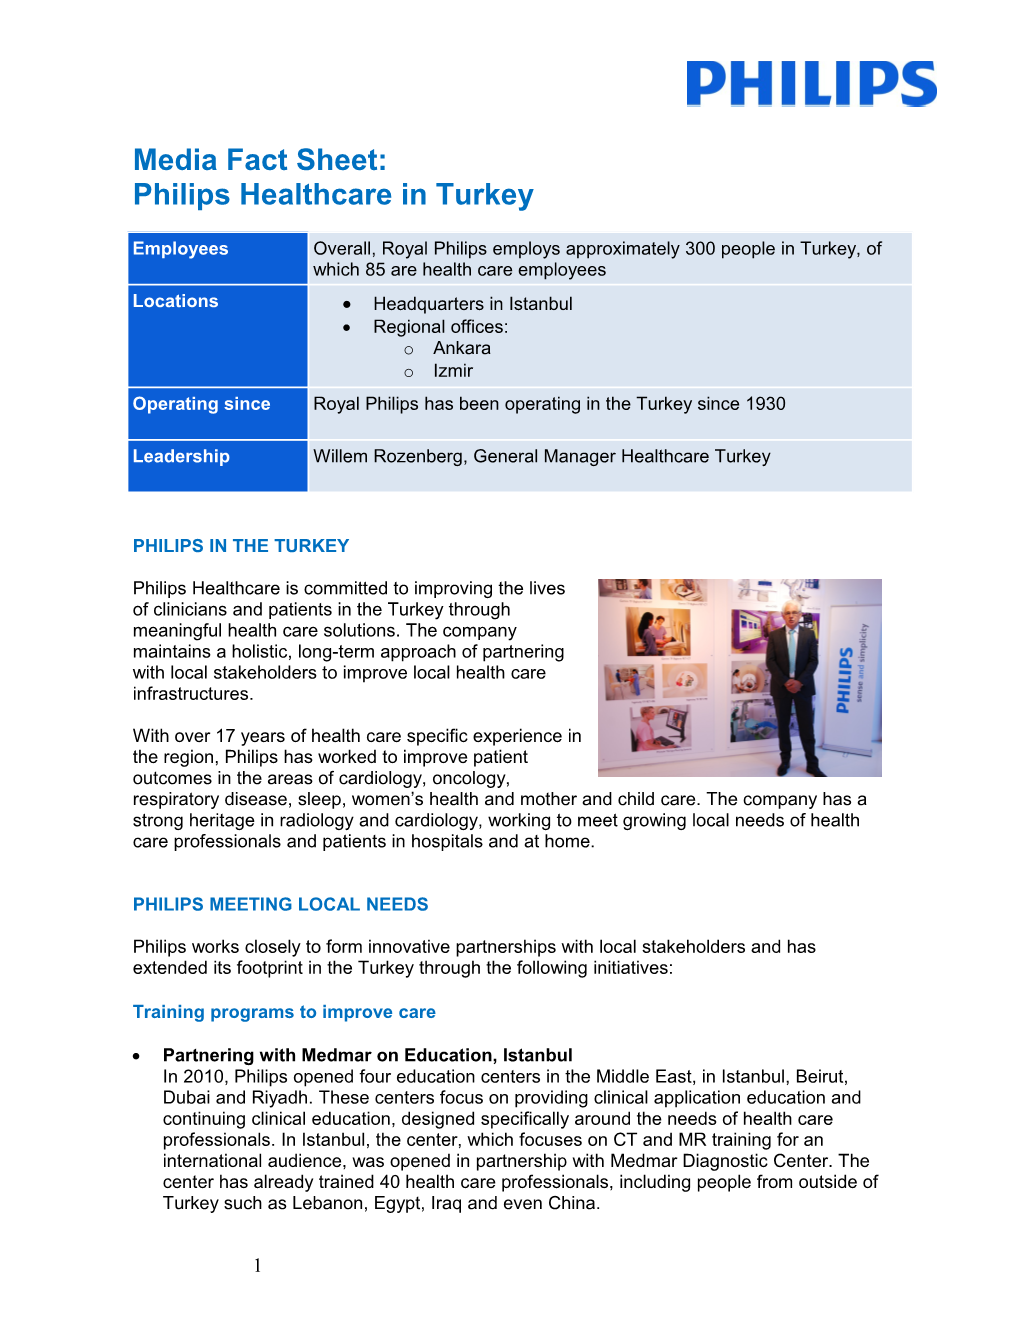 Media Fact Sheet: Philips Healthcare in Turkey